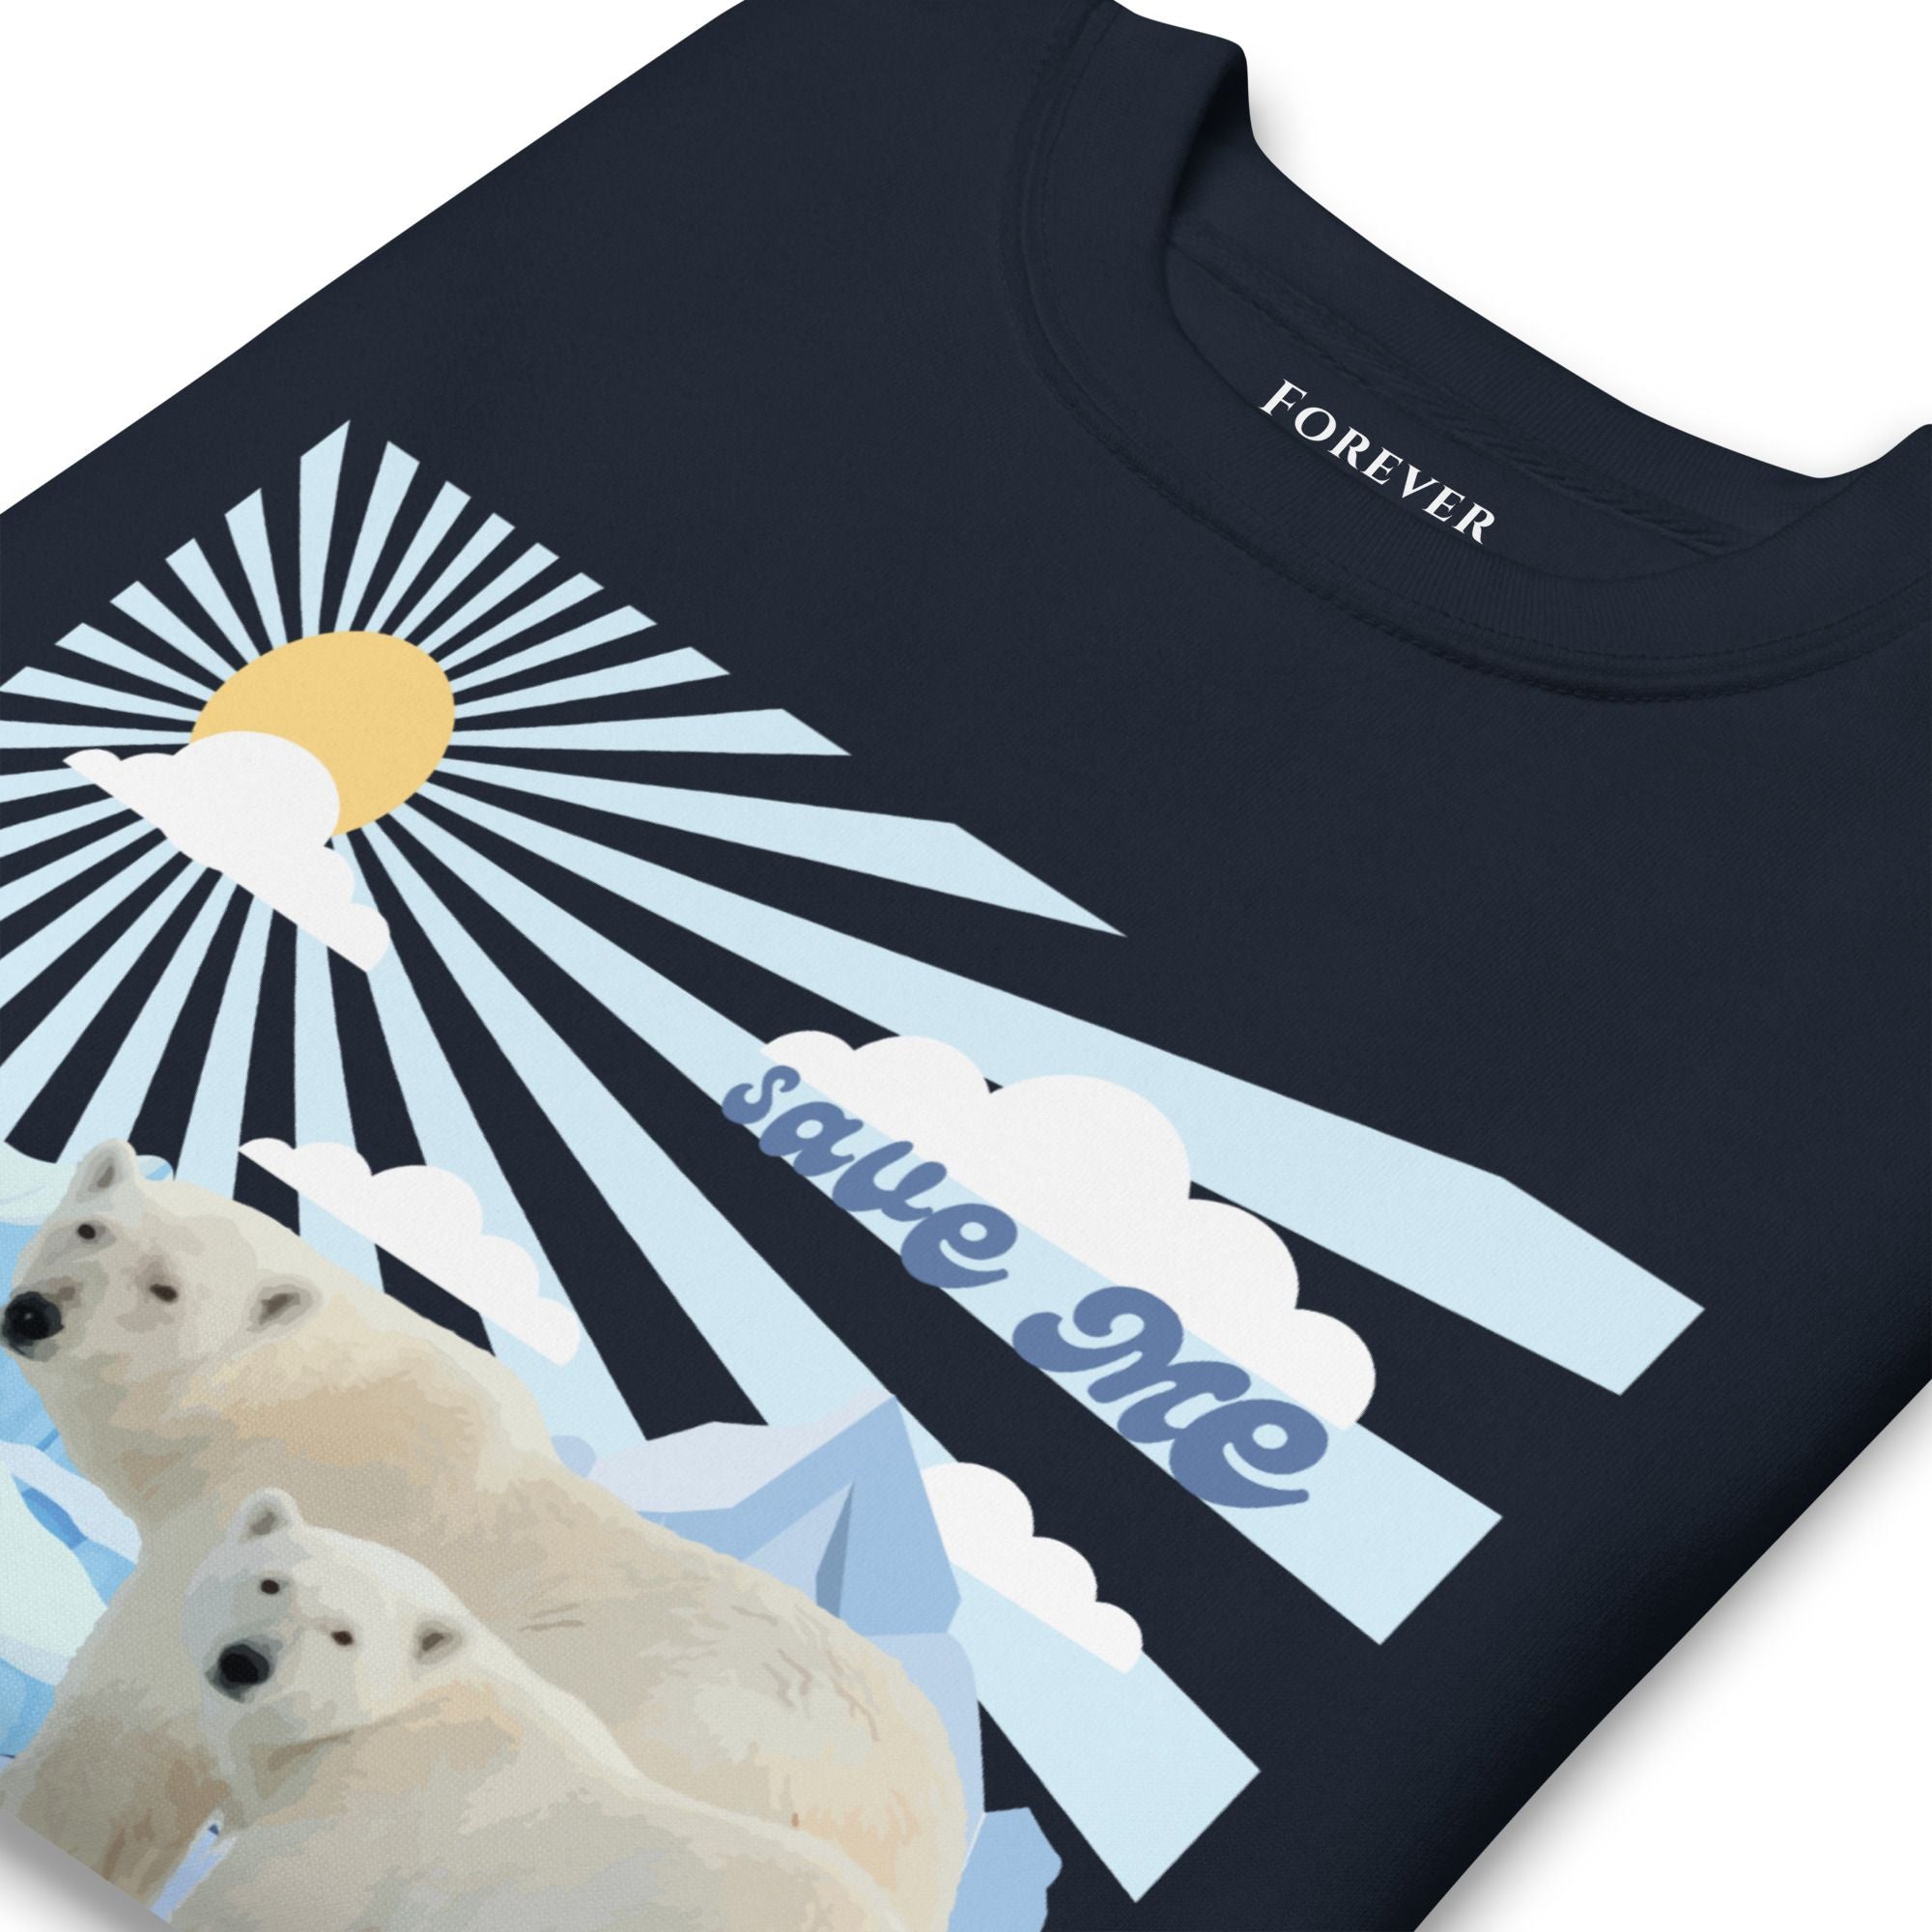  Polar Bears Sweatshirt in Navy-Premium Wildlife Animal Inspiration Sweatshirt Design with 'Save Me' text, part of Wildlife Sweatshirts & Clothing from Forever Wildlife.